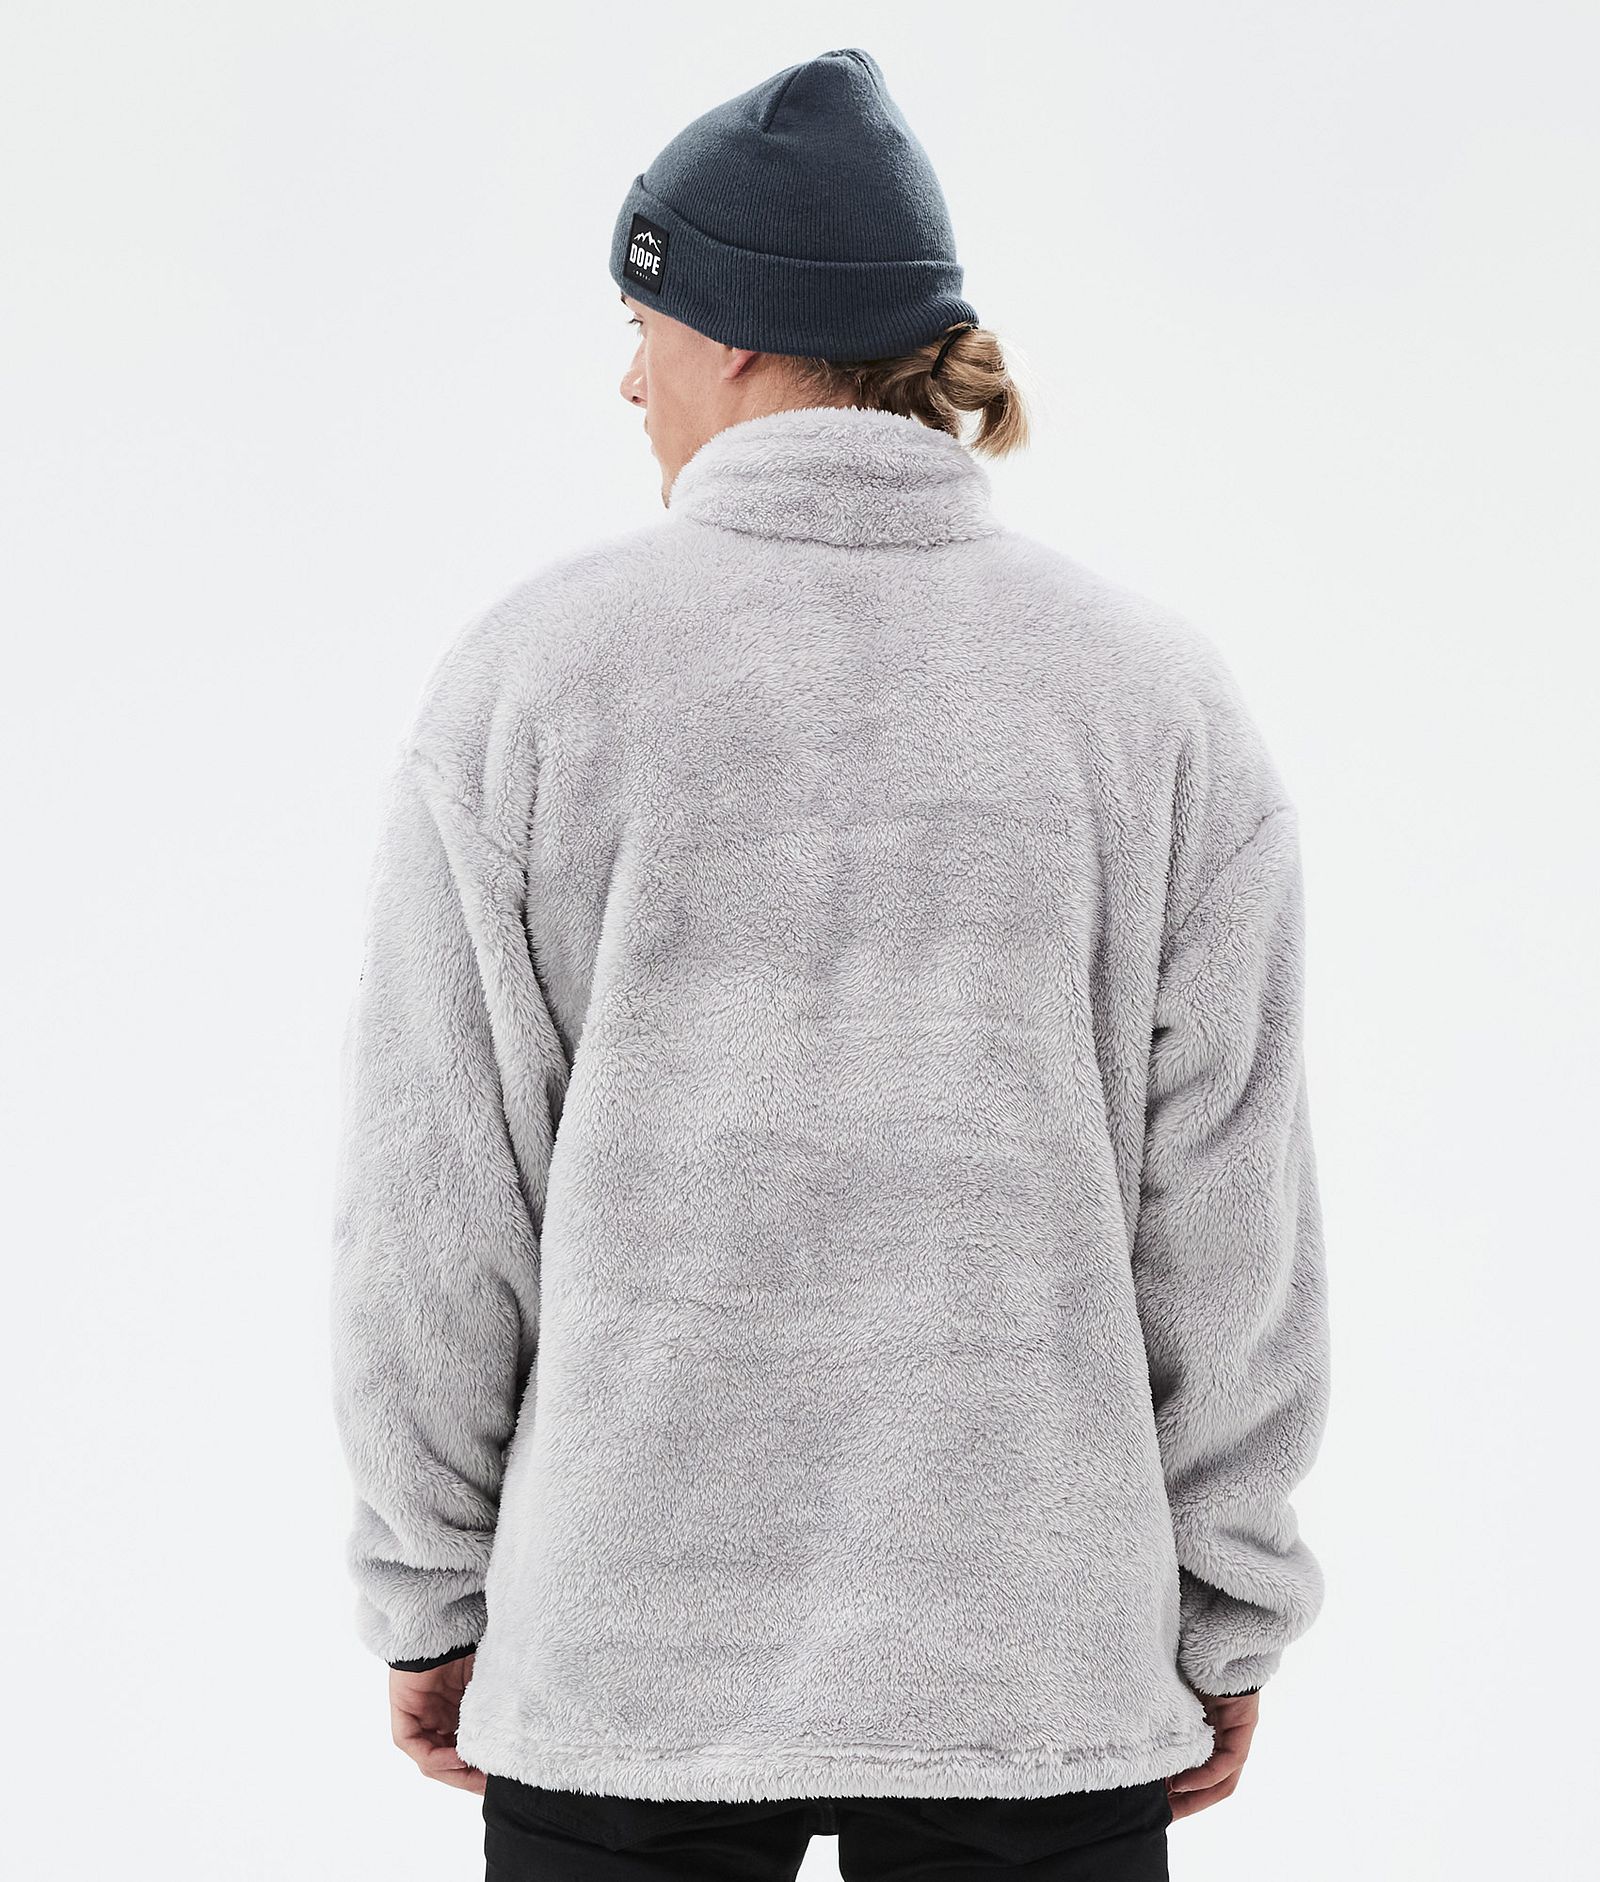 Pile Fleece Sweater Men Light Grey Renewed, Image 6 of 7